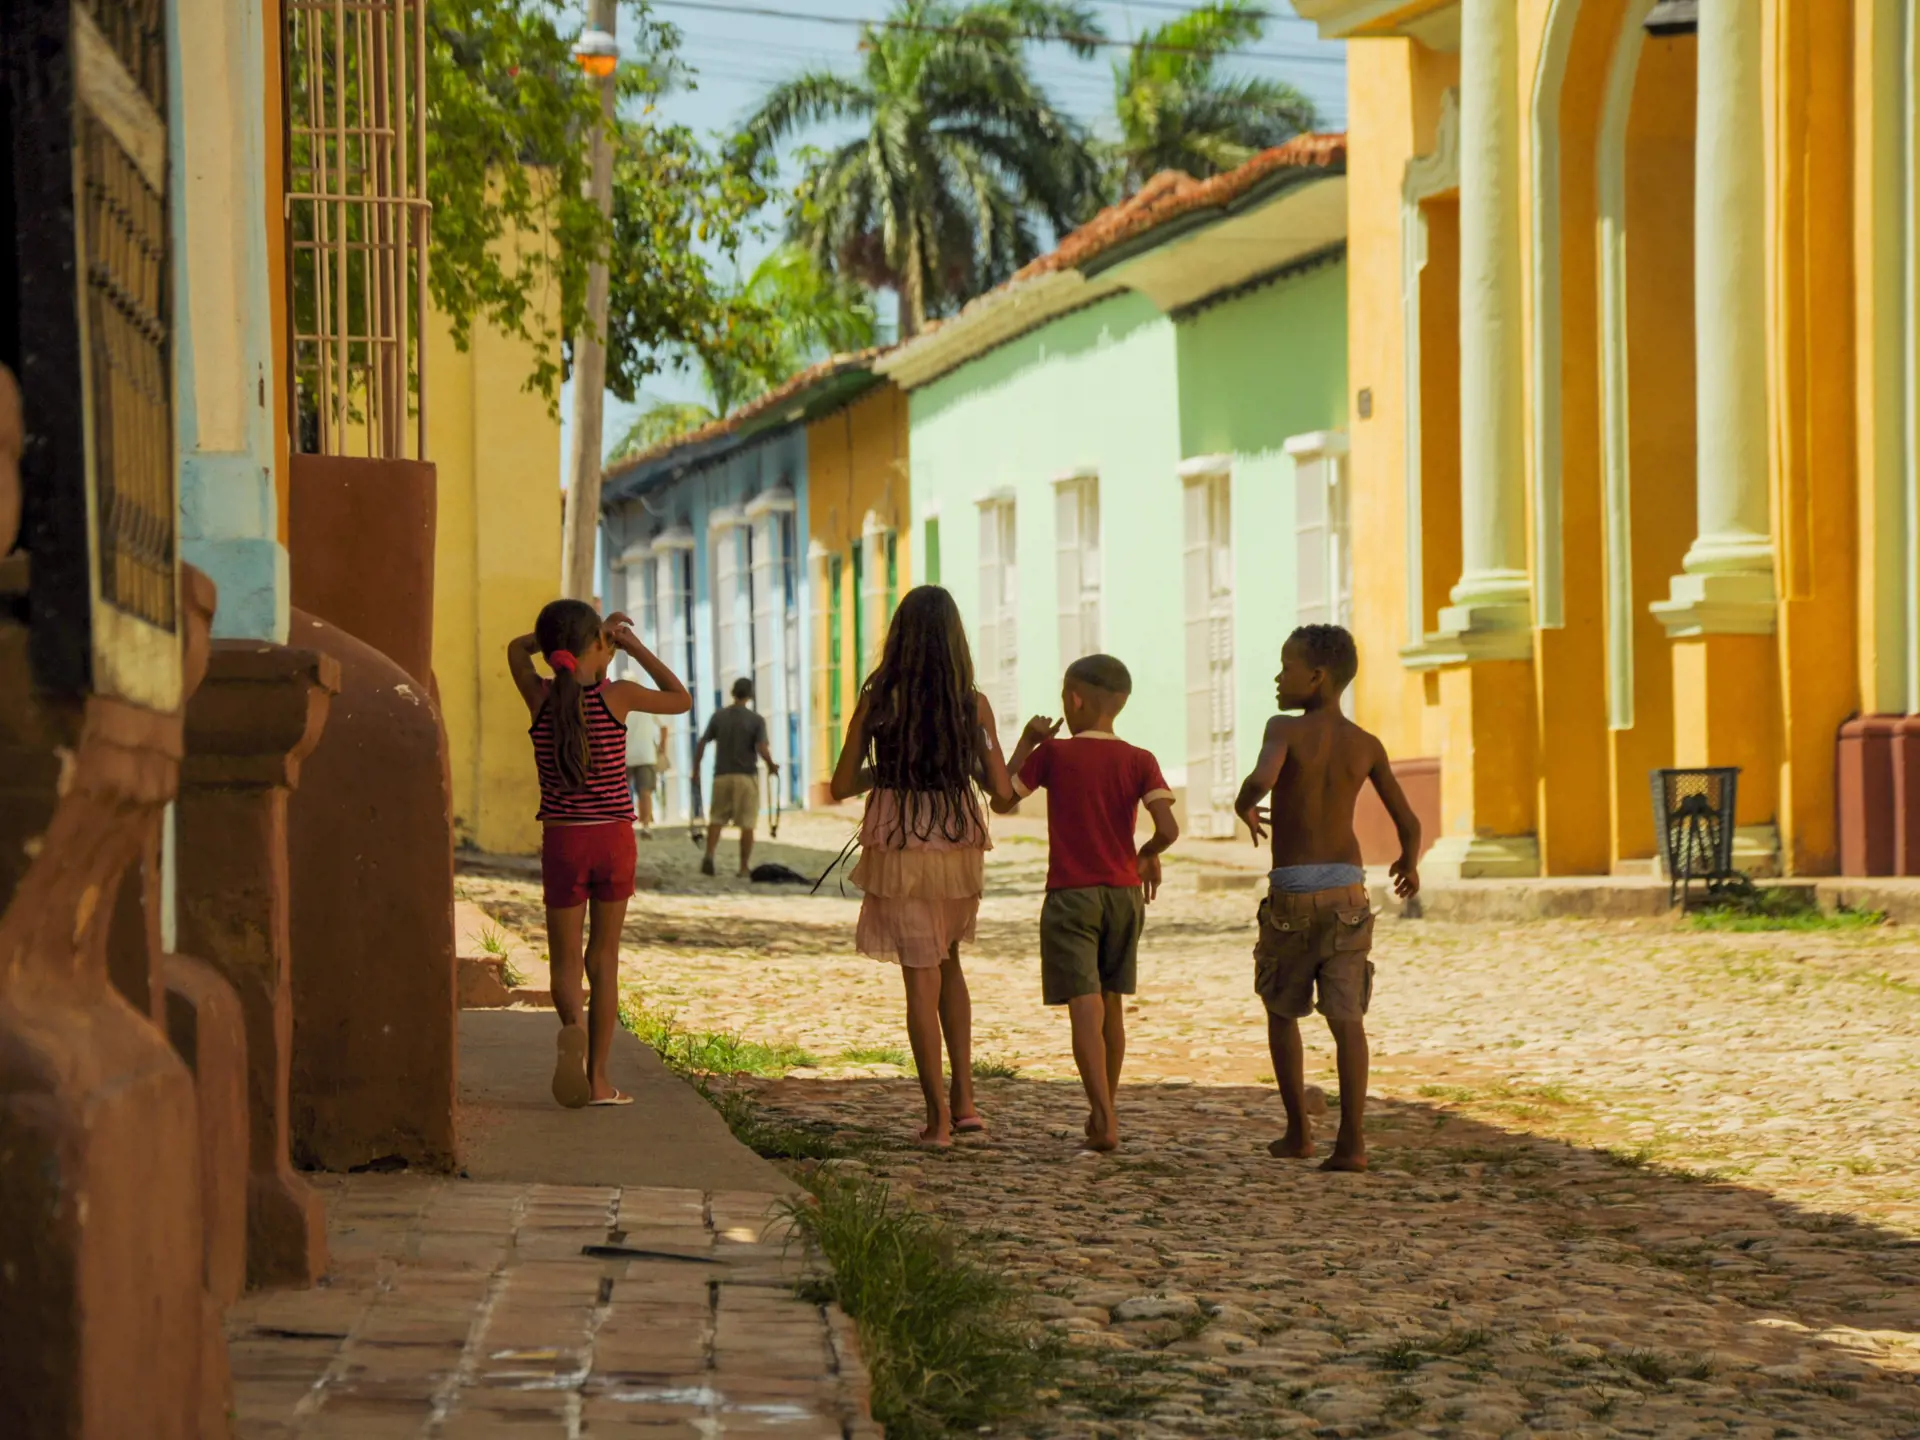 TRINIDAD, CUBA - MAY 26, 2013  kids walking on the street in UNESCO protected city of Trinidad, Cuba..jpg